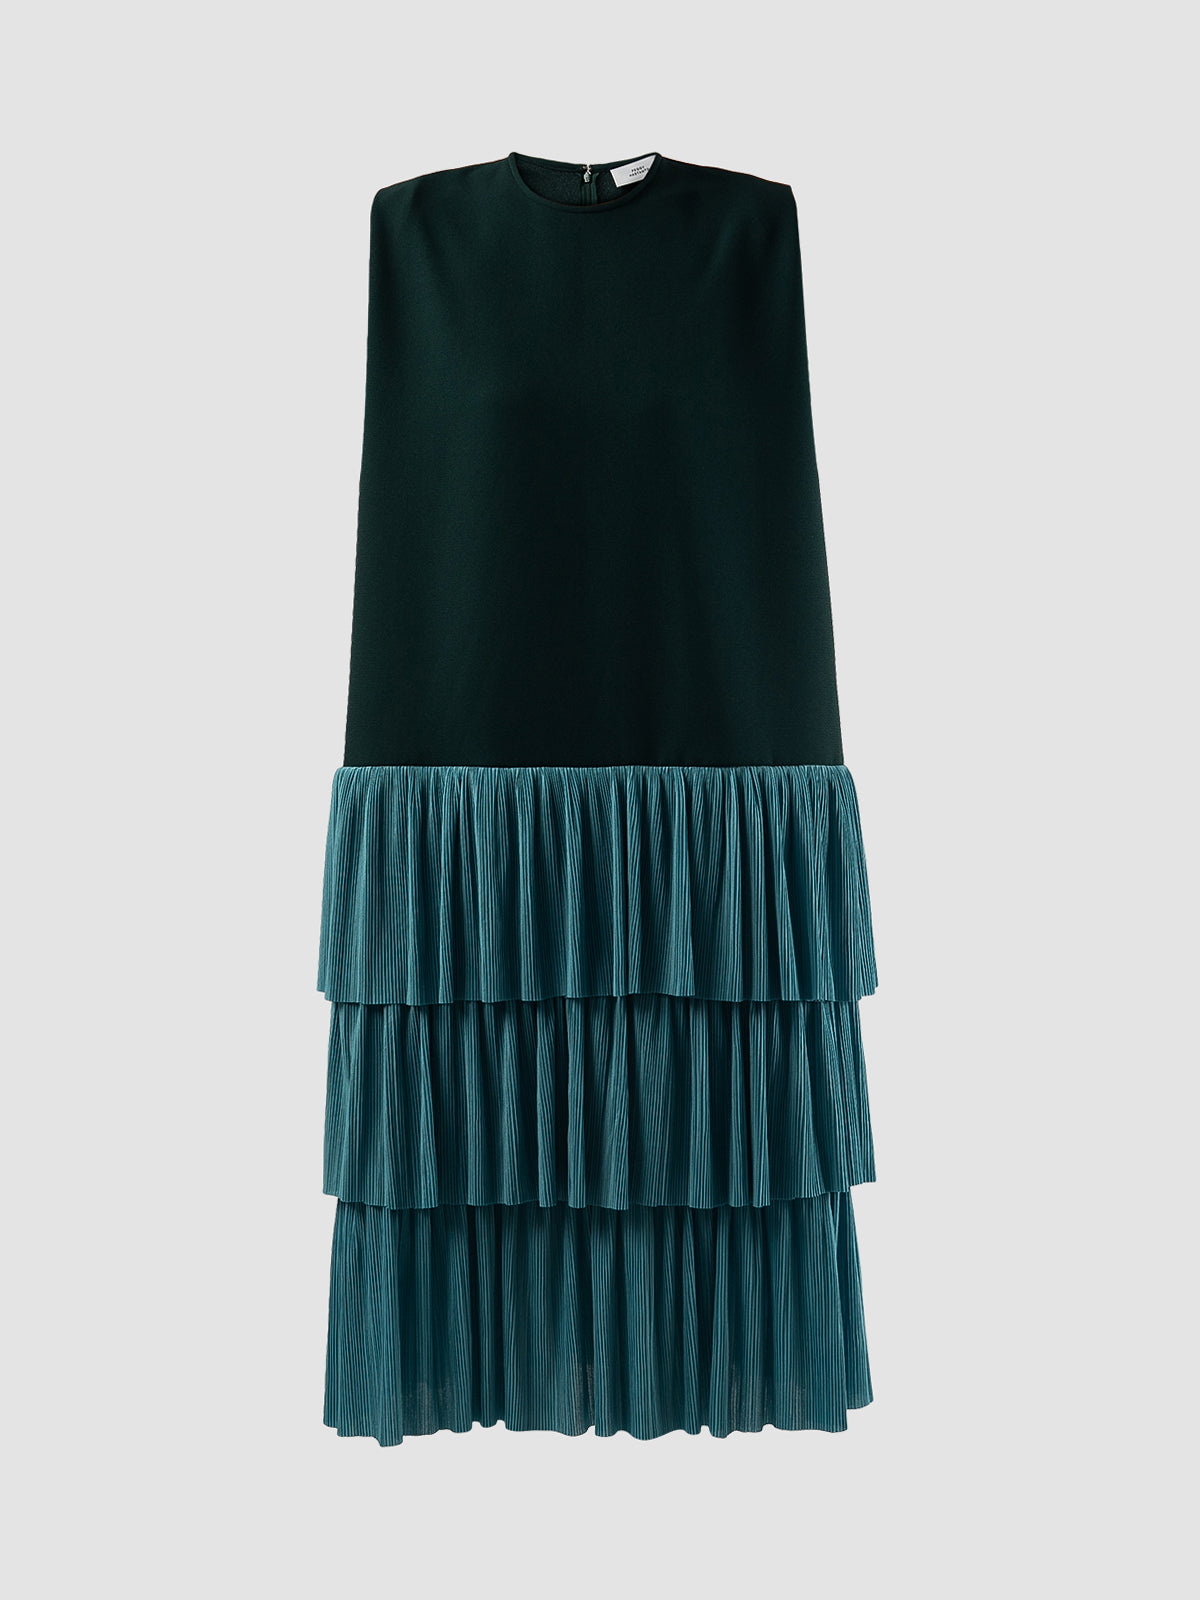 Celtic green-turquoise Blacktip pleat dress